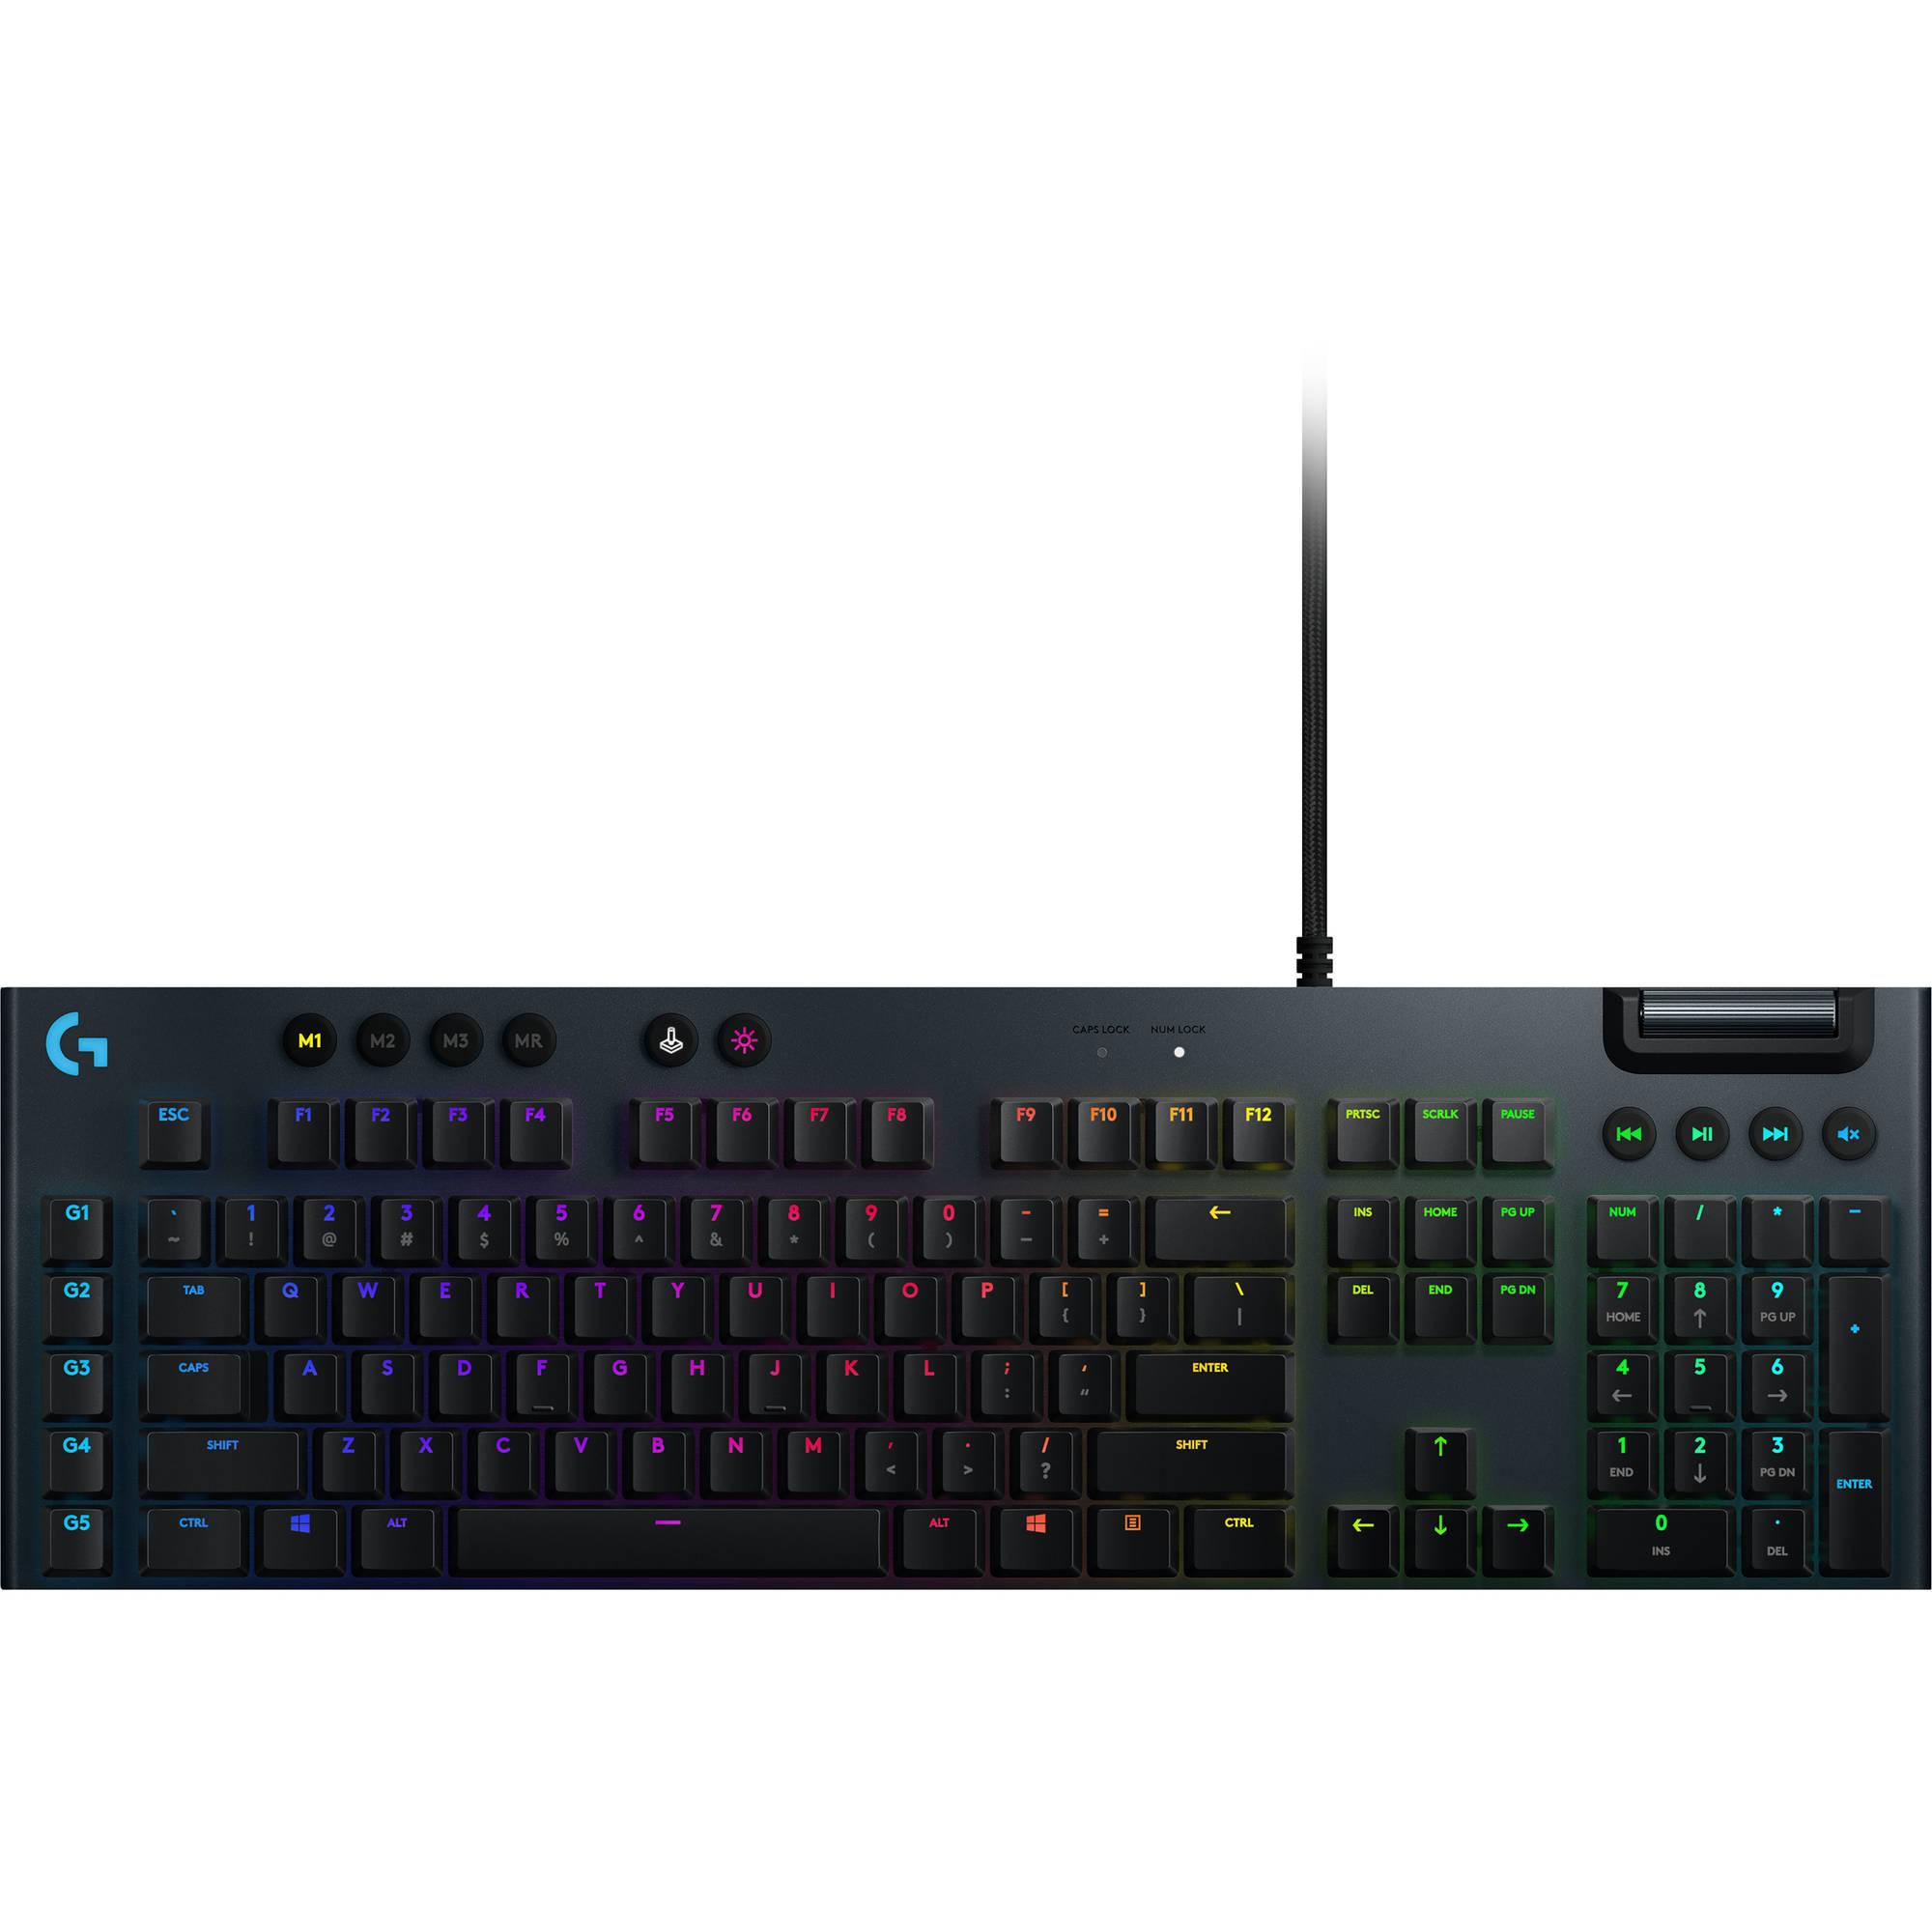 Logitech G815 LIGHTSYNC RGB Mechanical Gaming Keyboard, 5 programmable G-keys - Clicky – Black